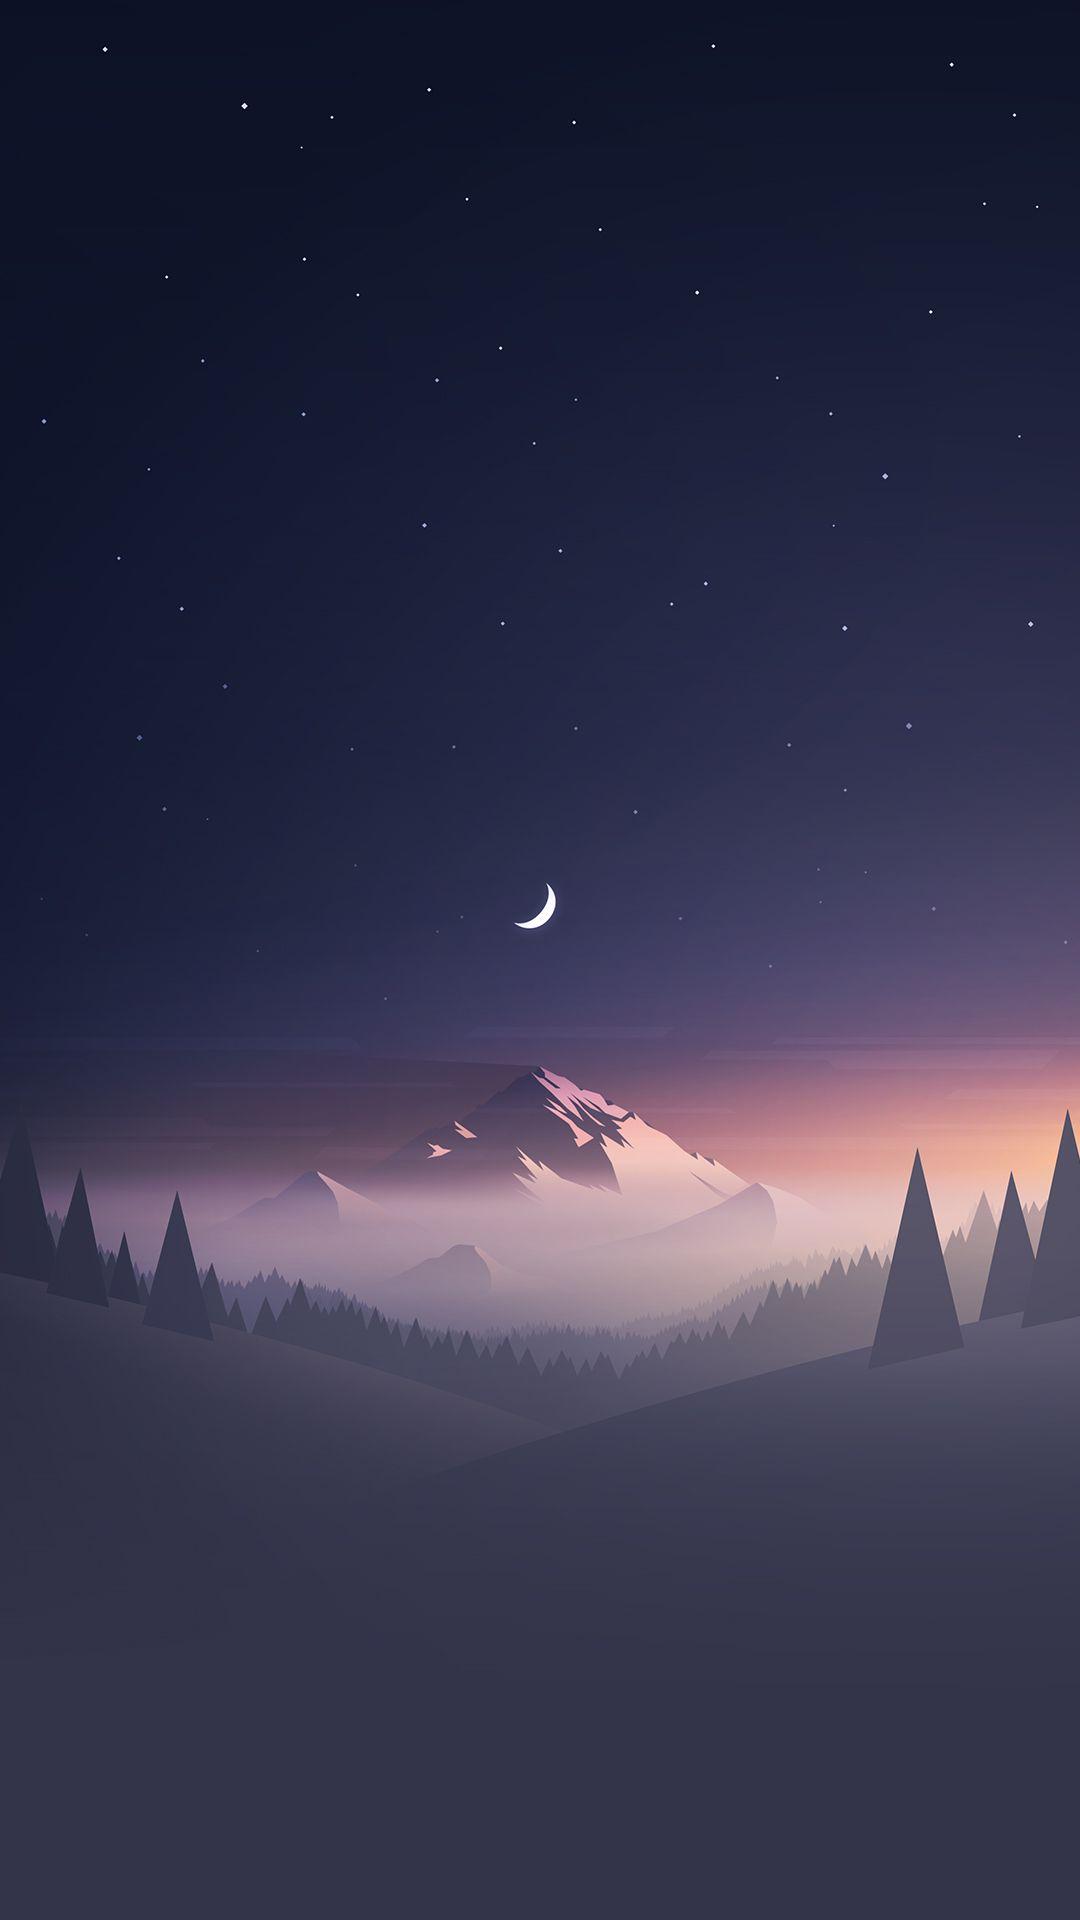 1080x1920 Stars And Moon Winter Mountain Landscape Tải xuống Hình nền iPhone 8